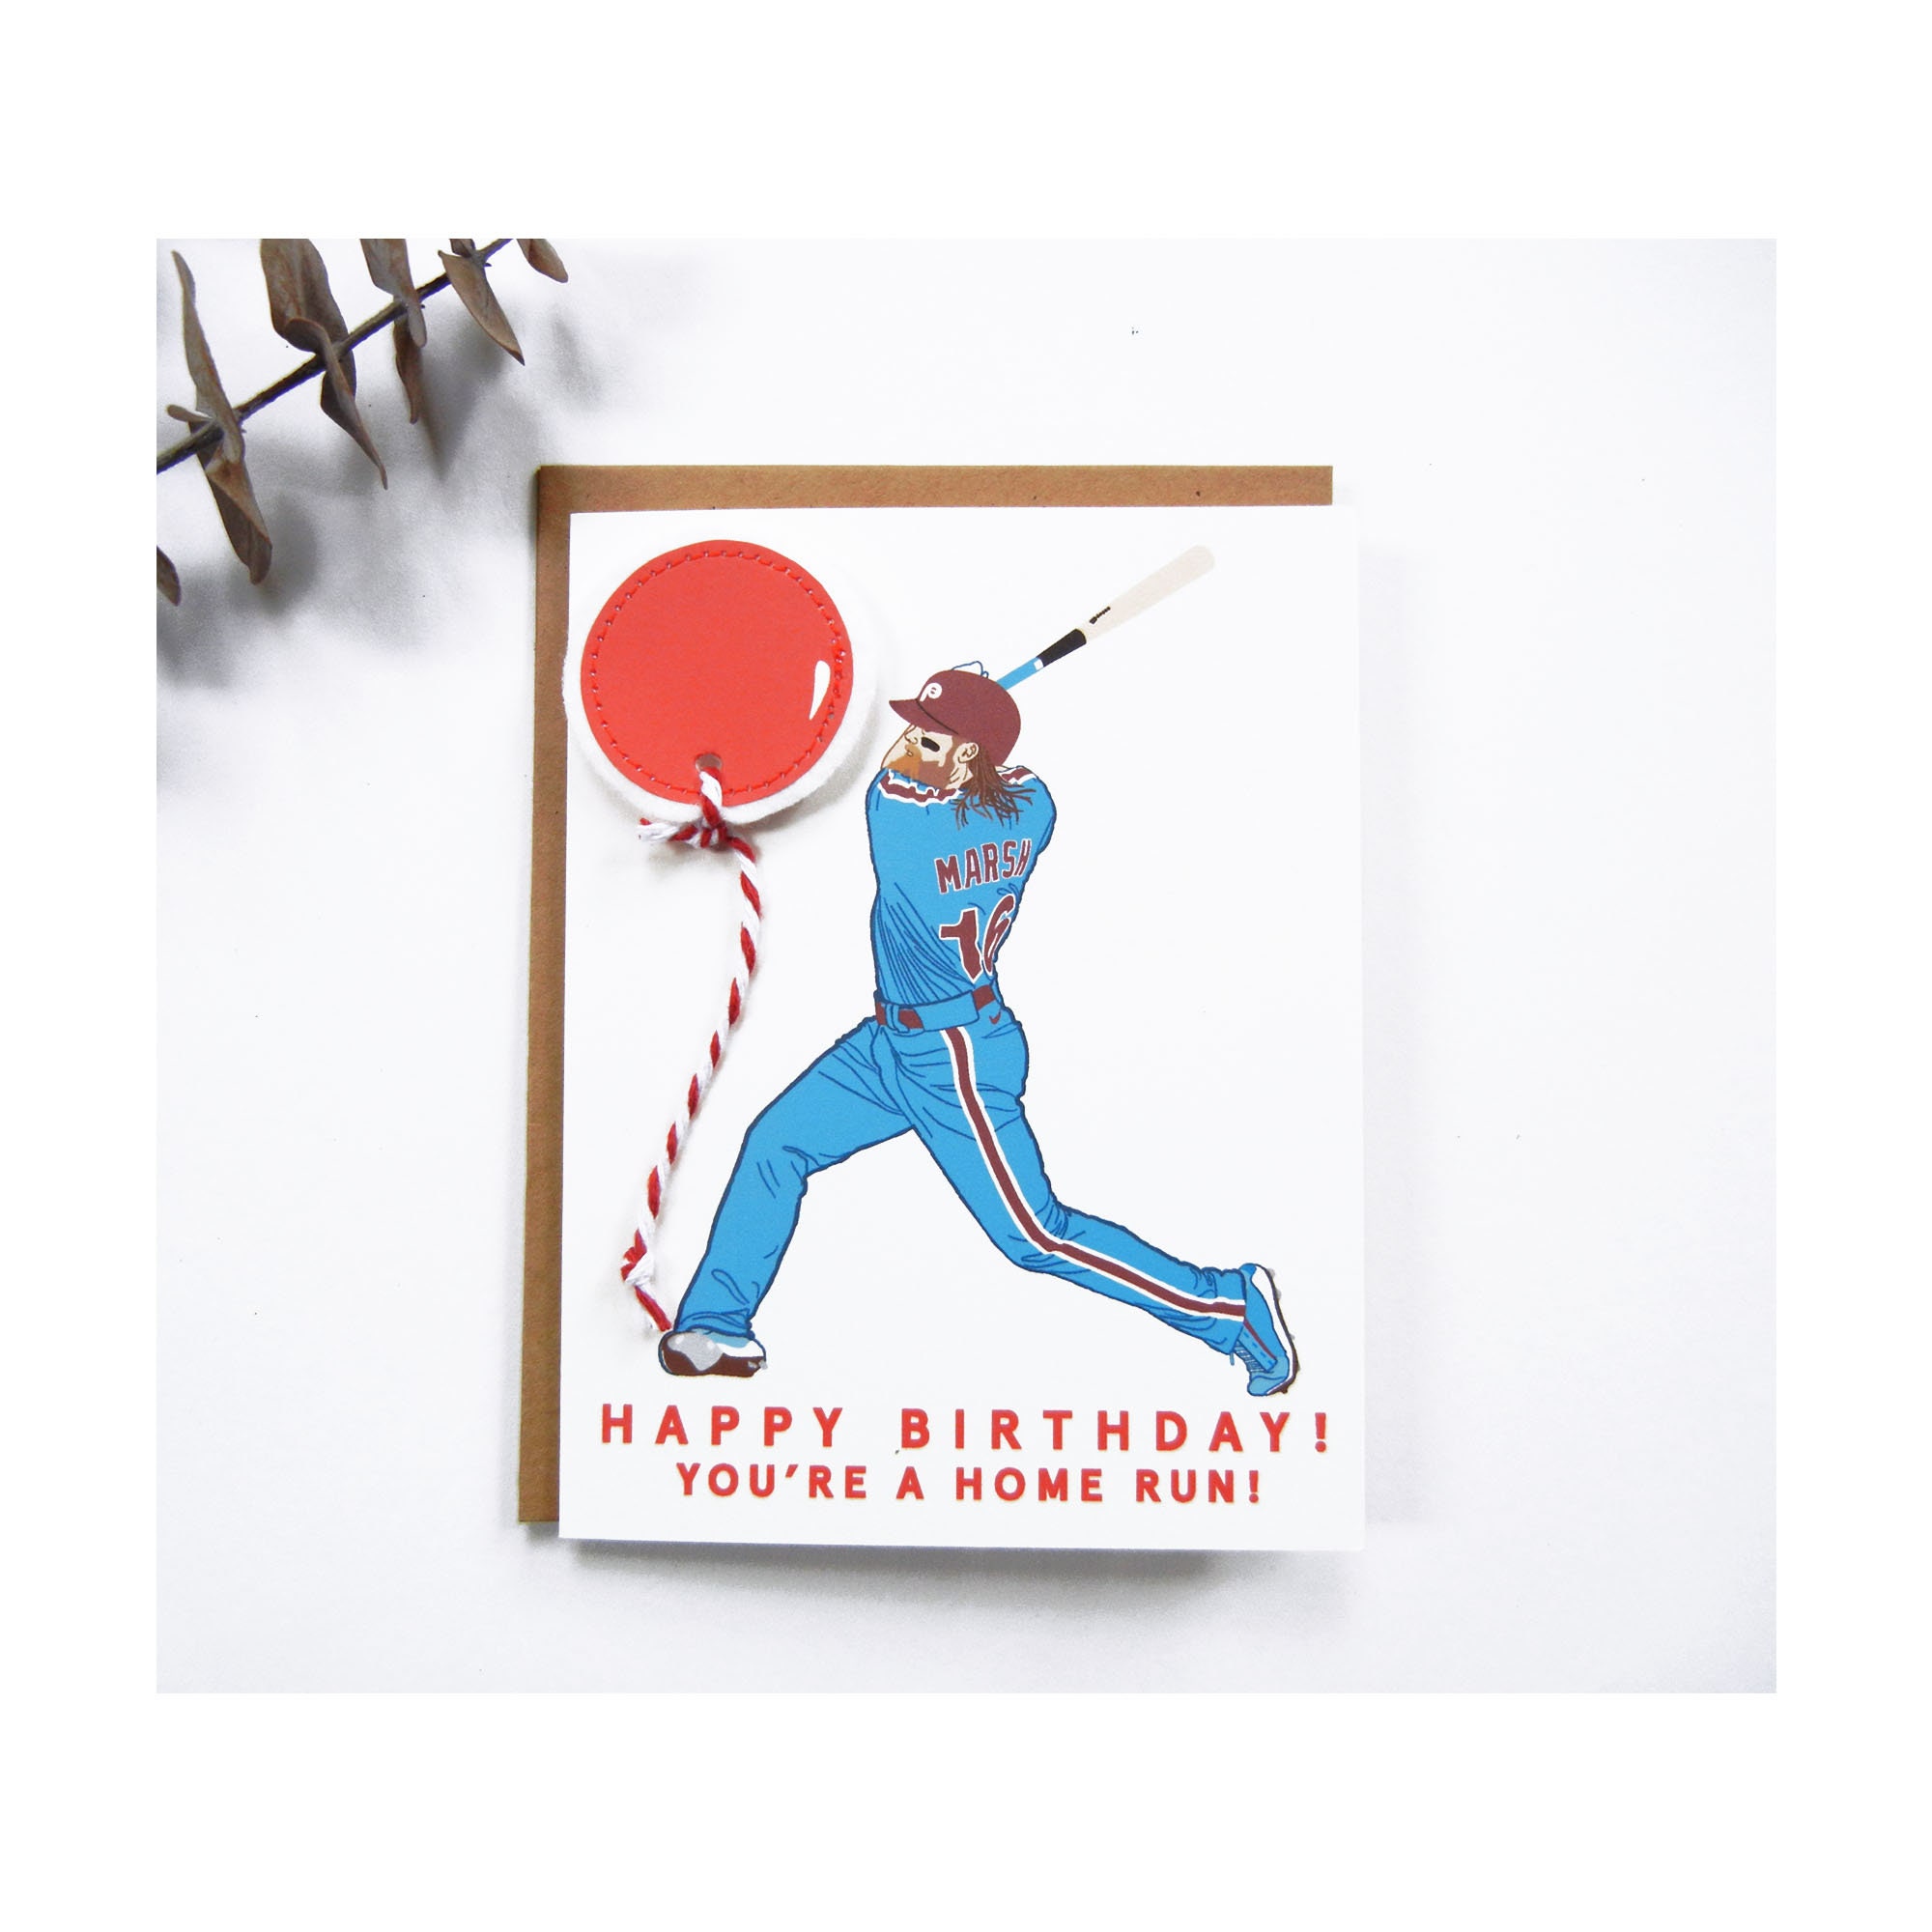 Brandon Marsh Baseball Player Printed Illustration Card / 